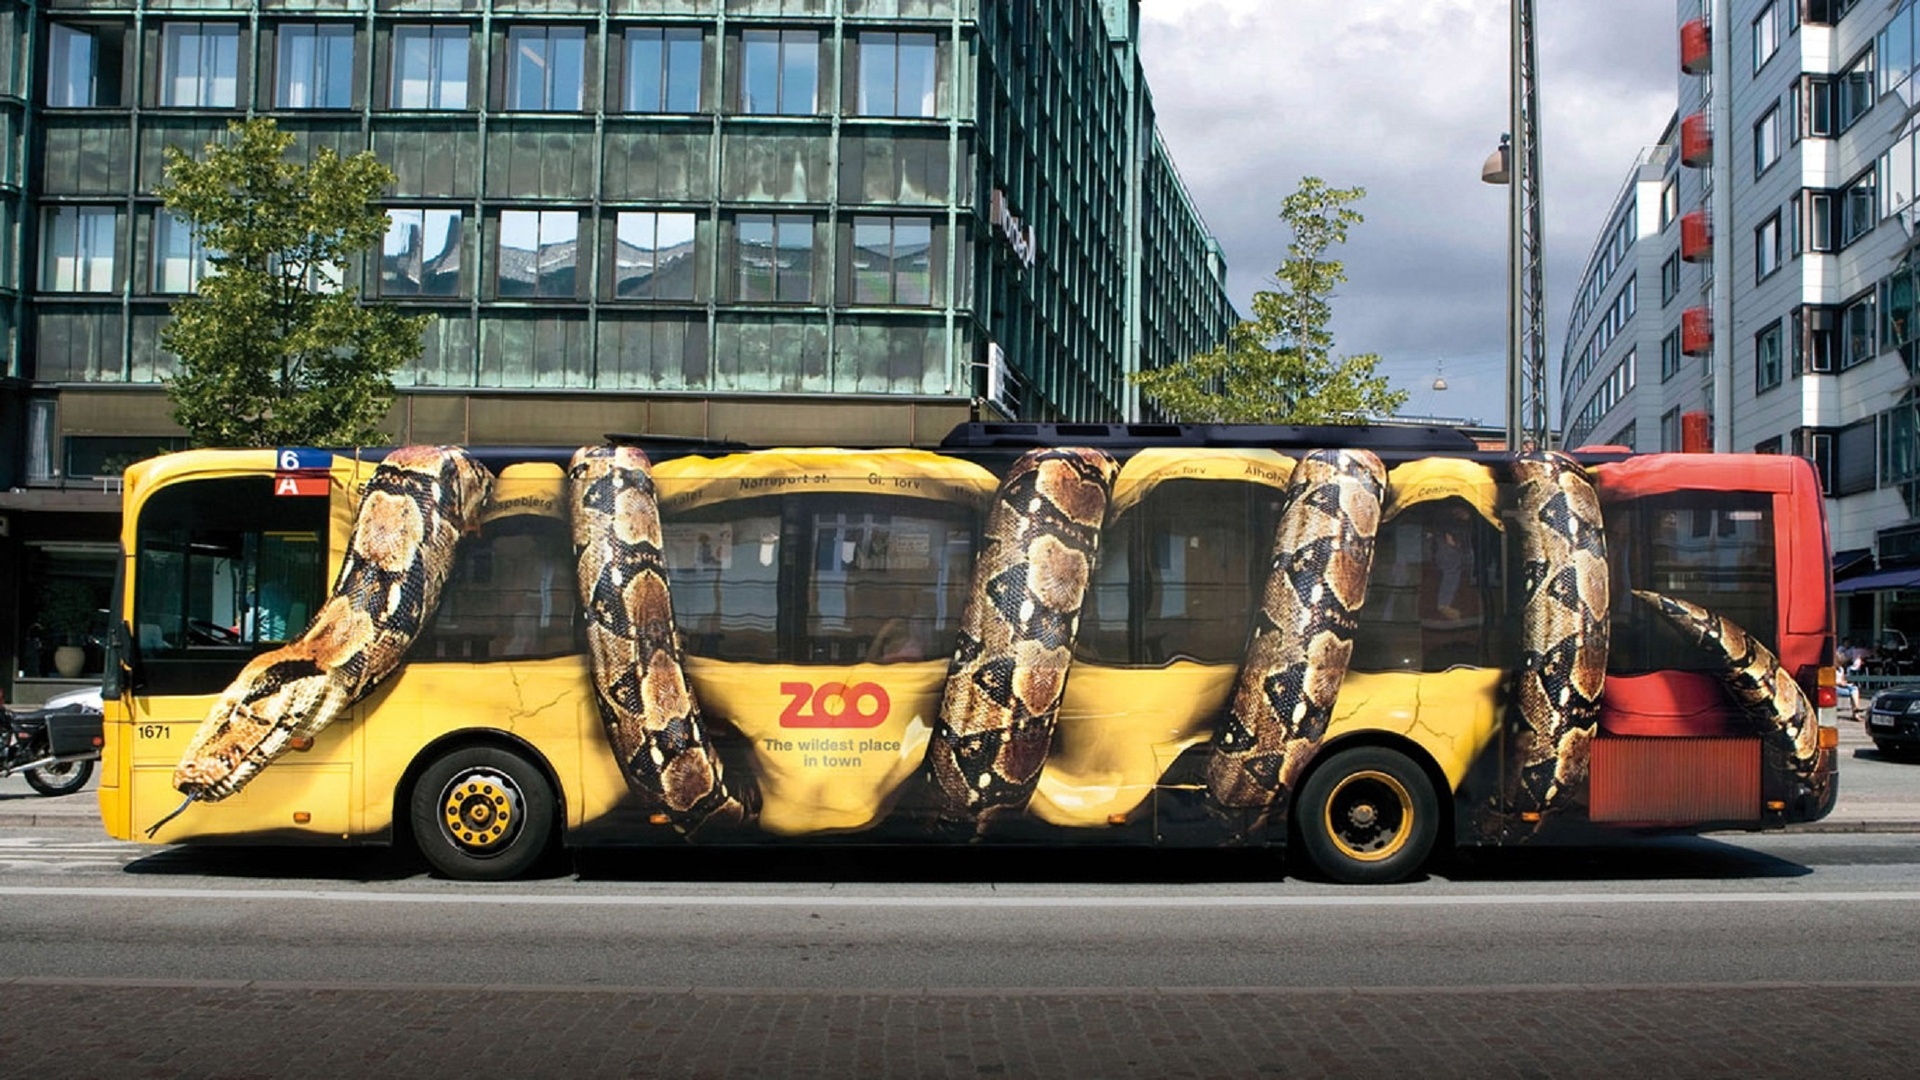 1920x1080 Background vehicles, bus